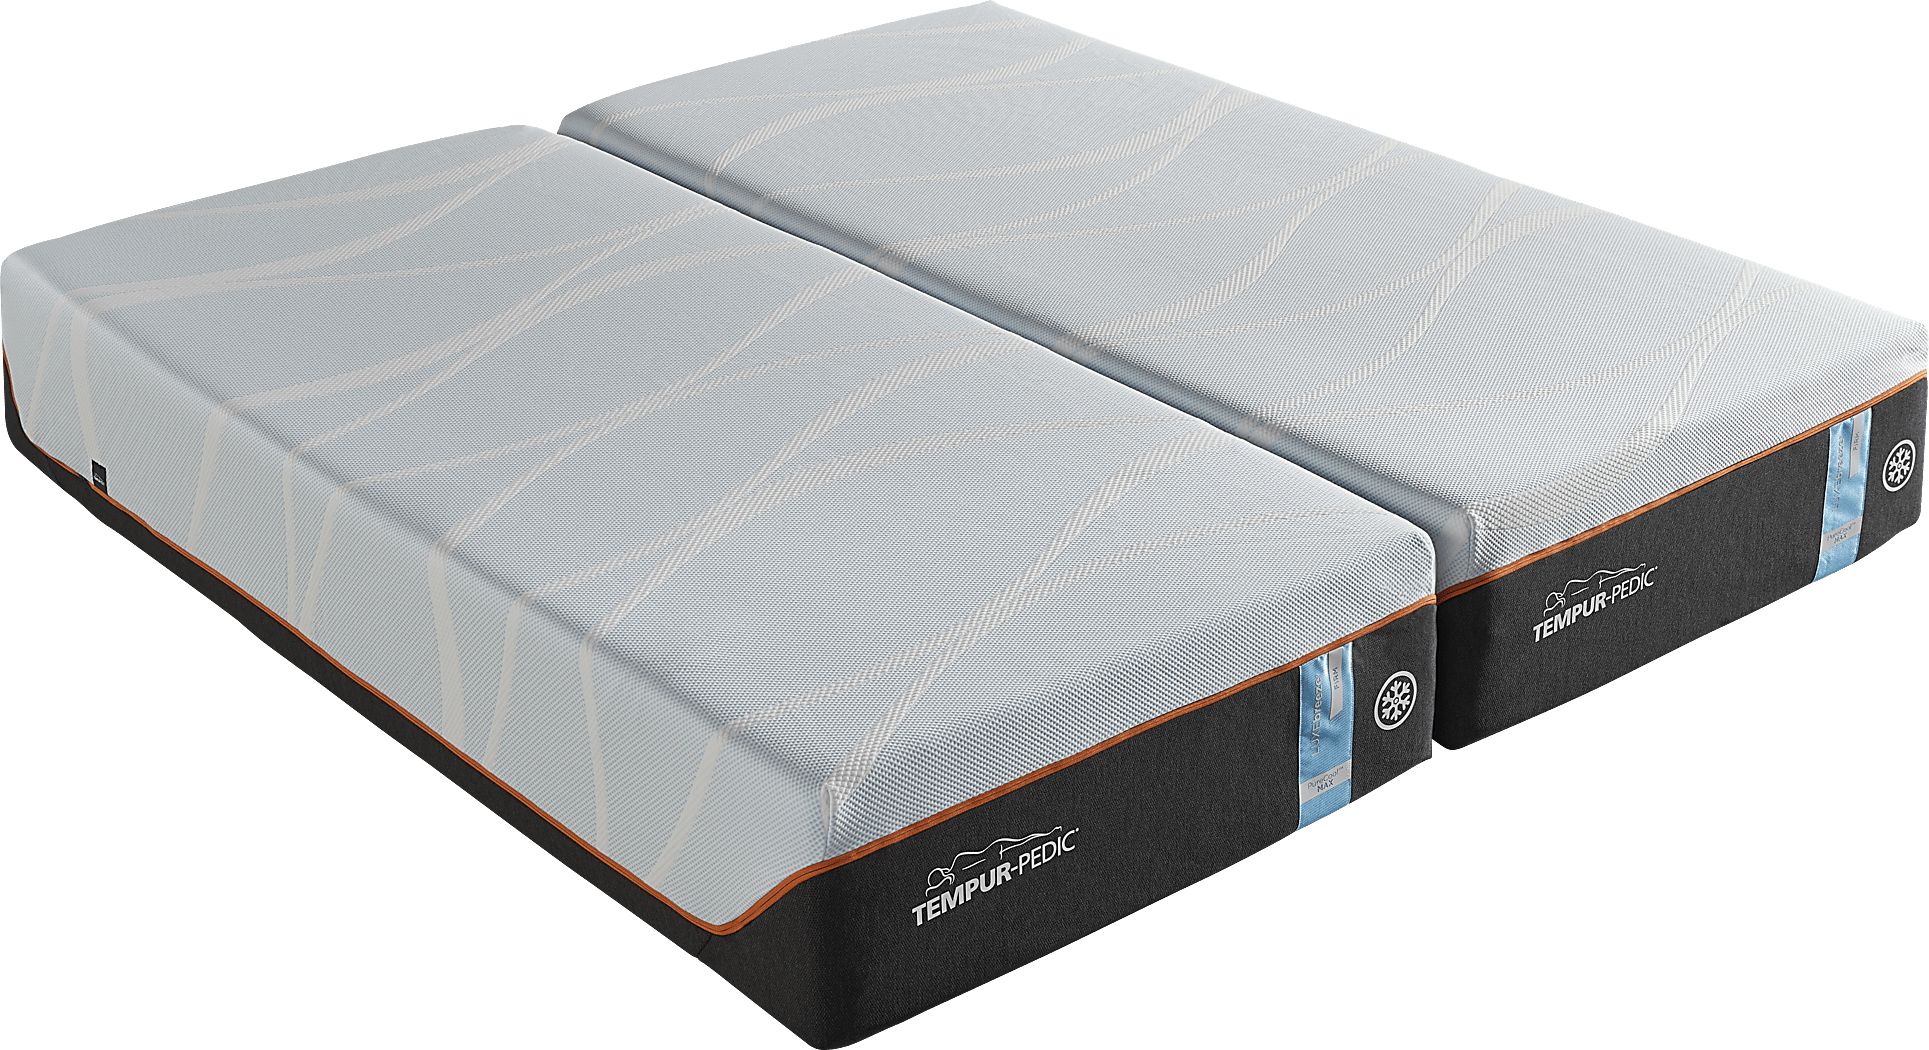 tempur pedic split king mattress dimensions